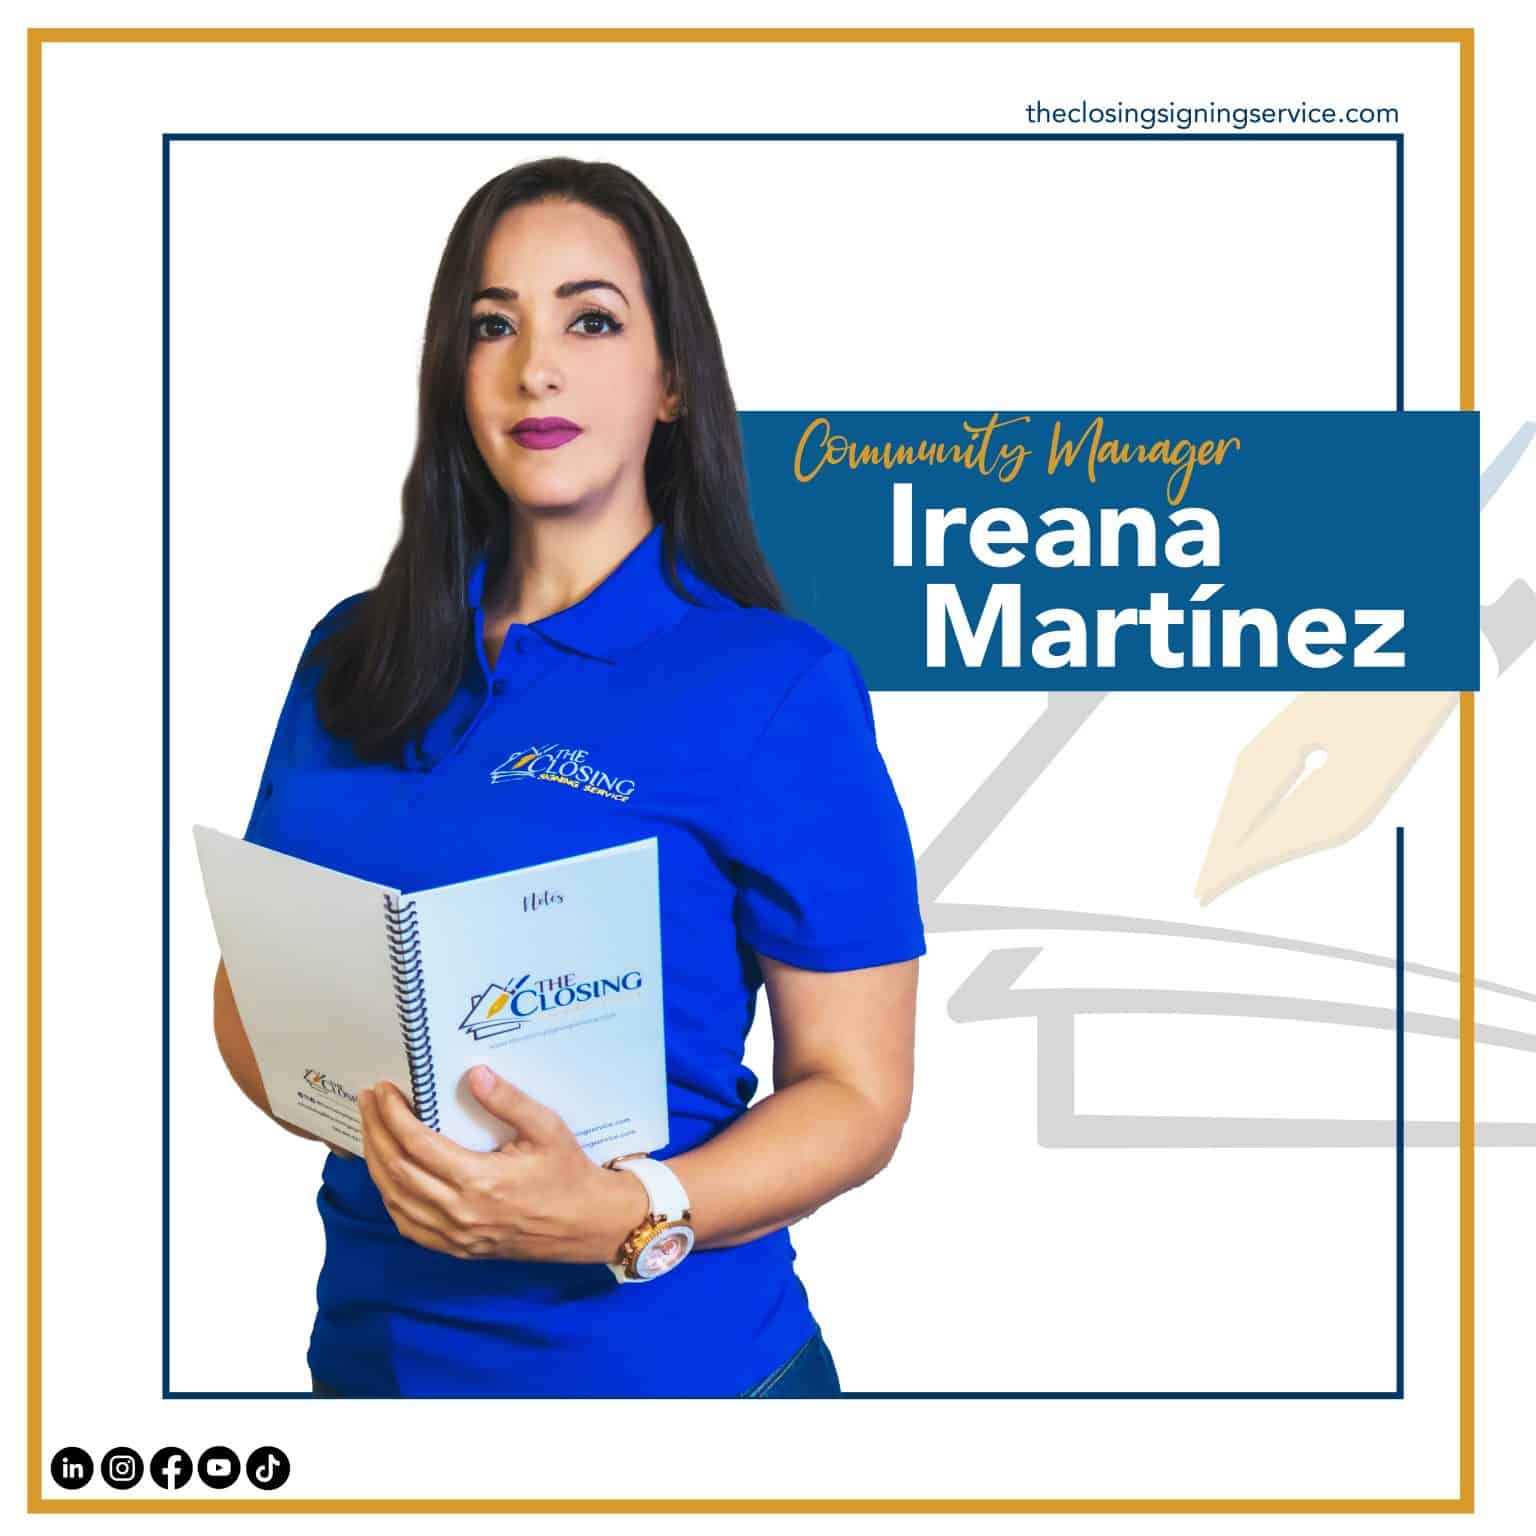 Ireana-Community Manager